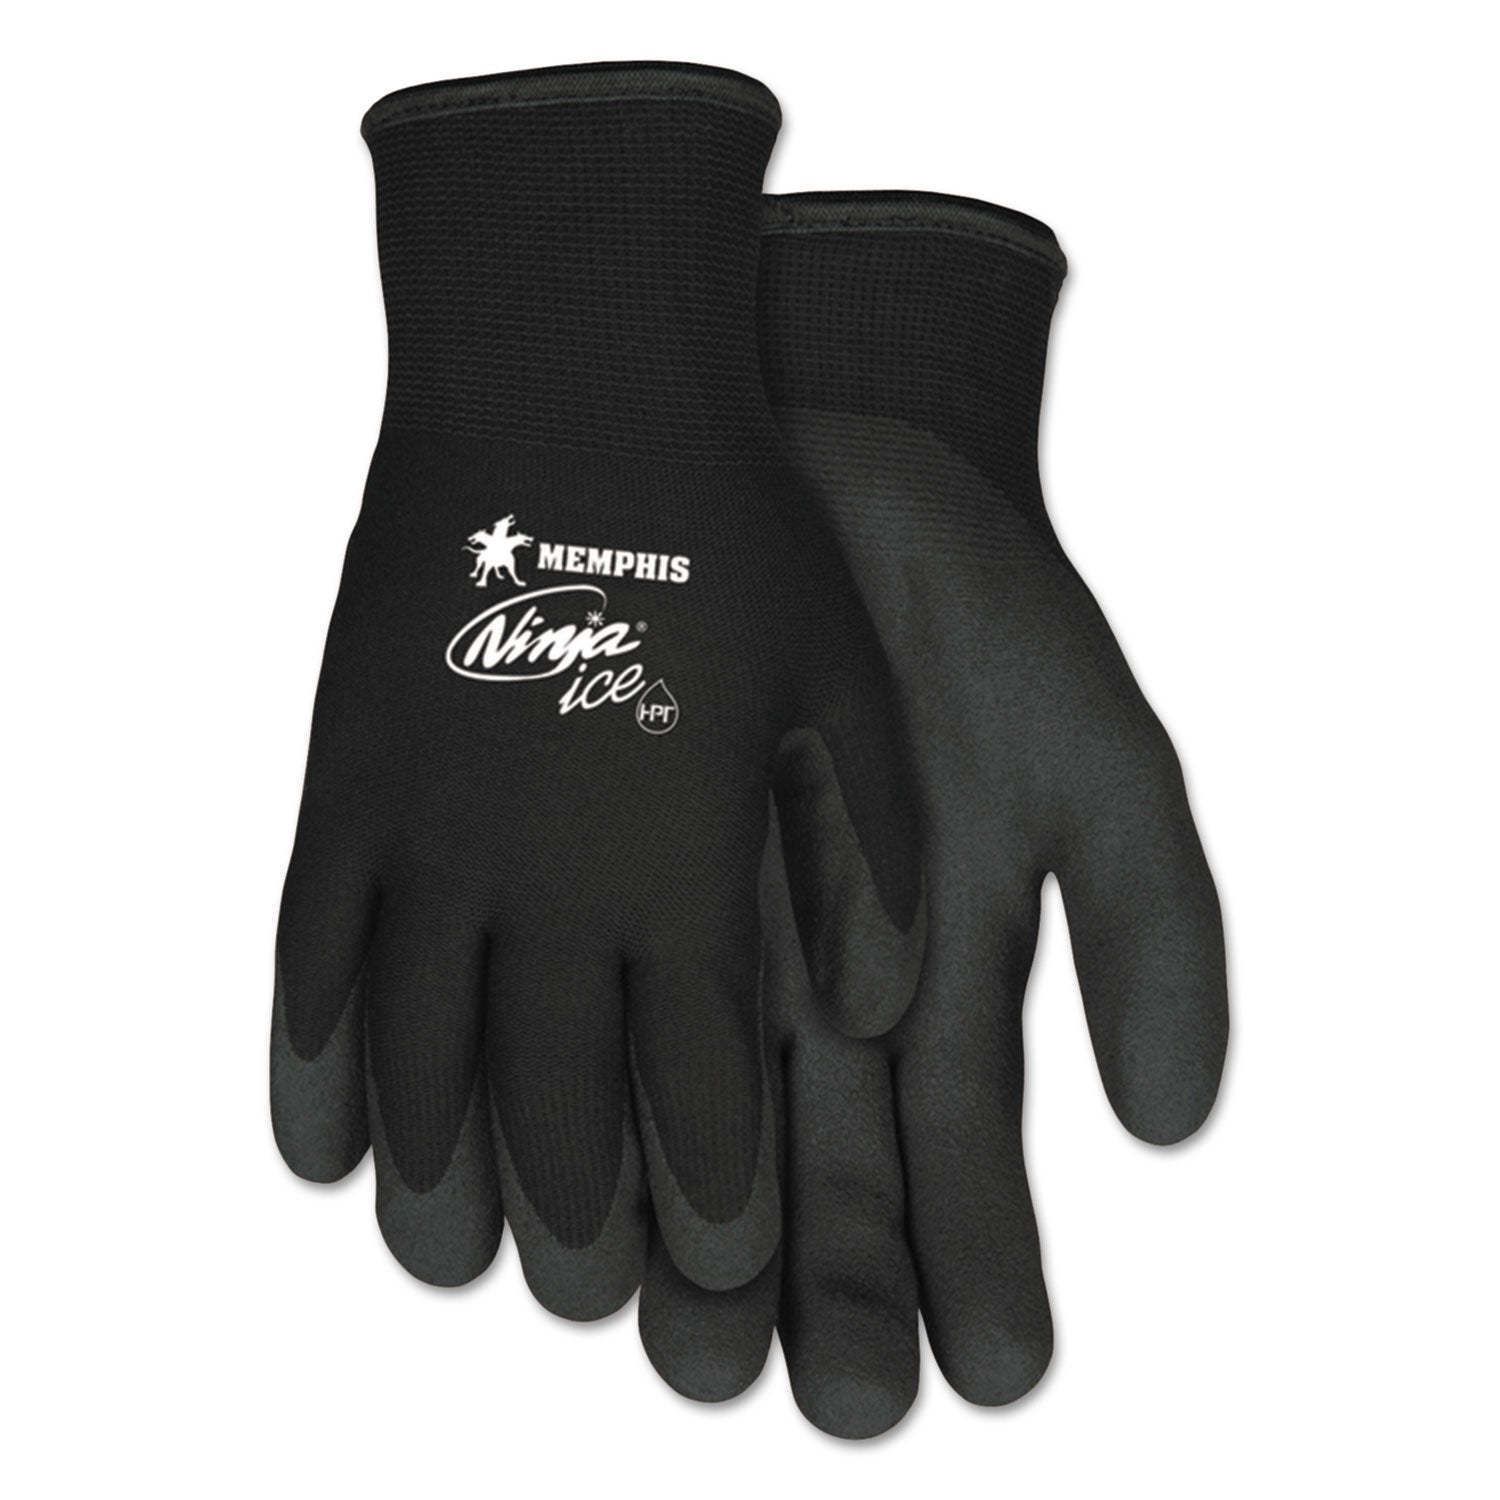 ninja-ice-gloves-black-x-large_crwn9690xl - 1